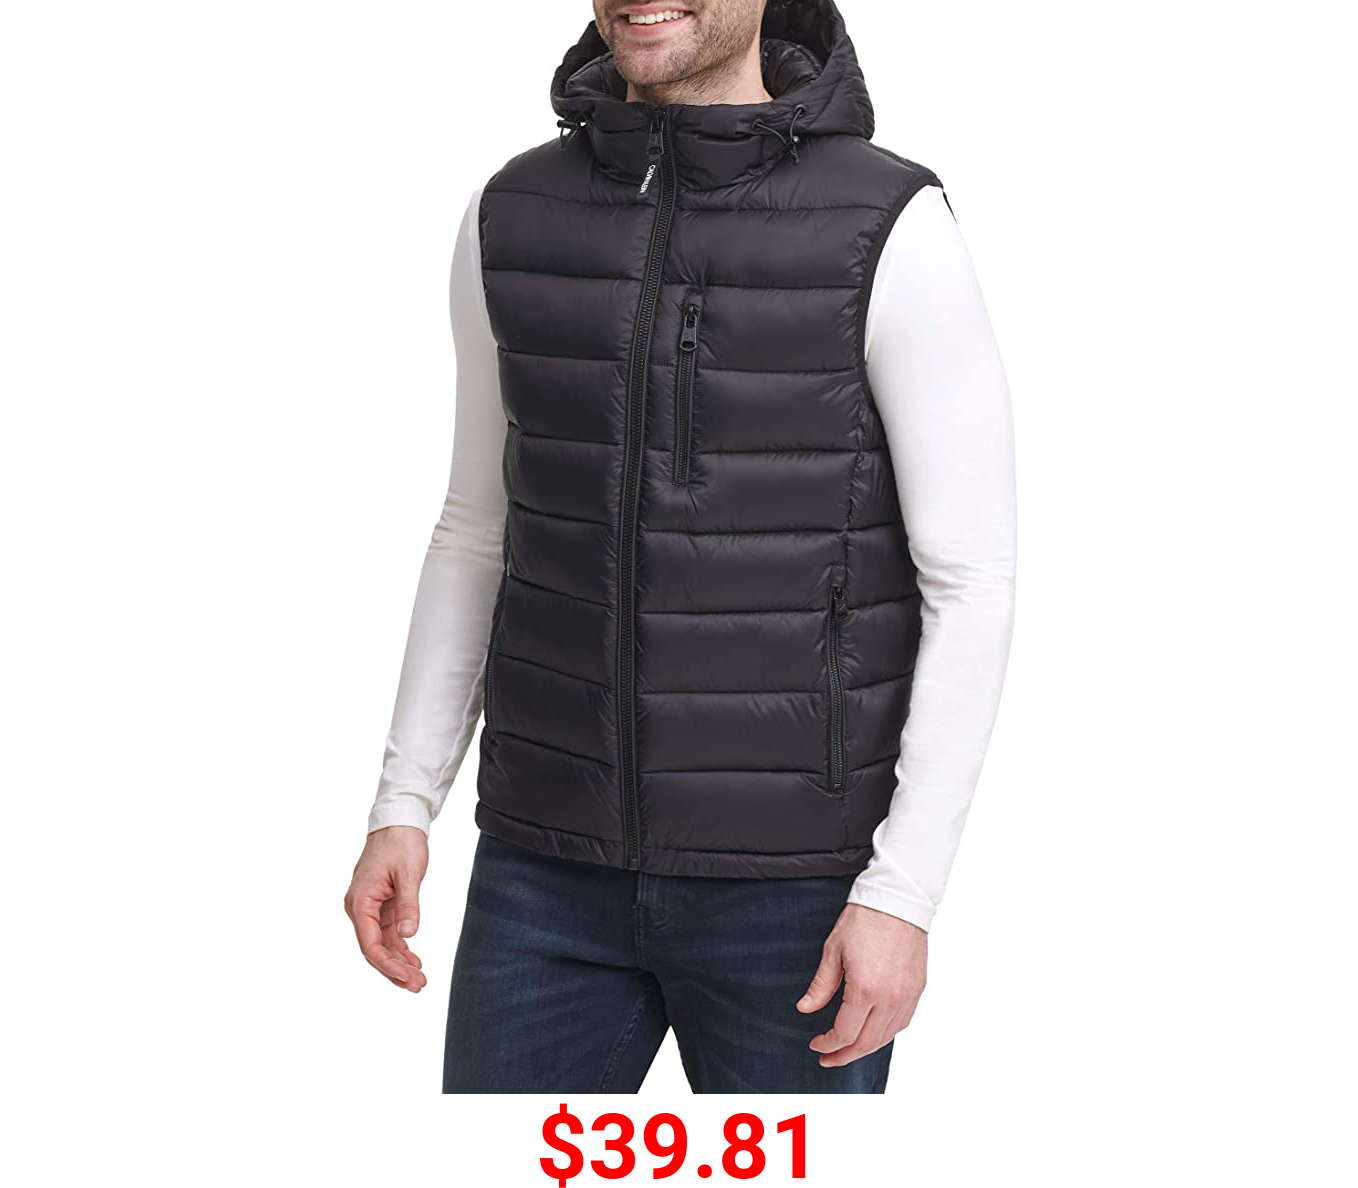 Calvin Klein Men's Packable Vest